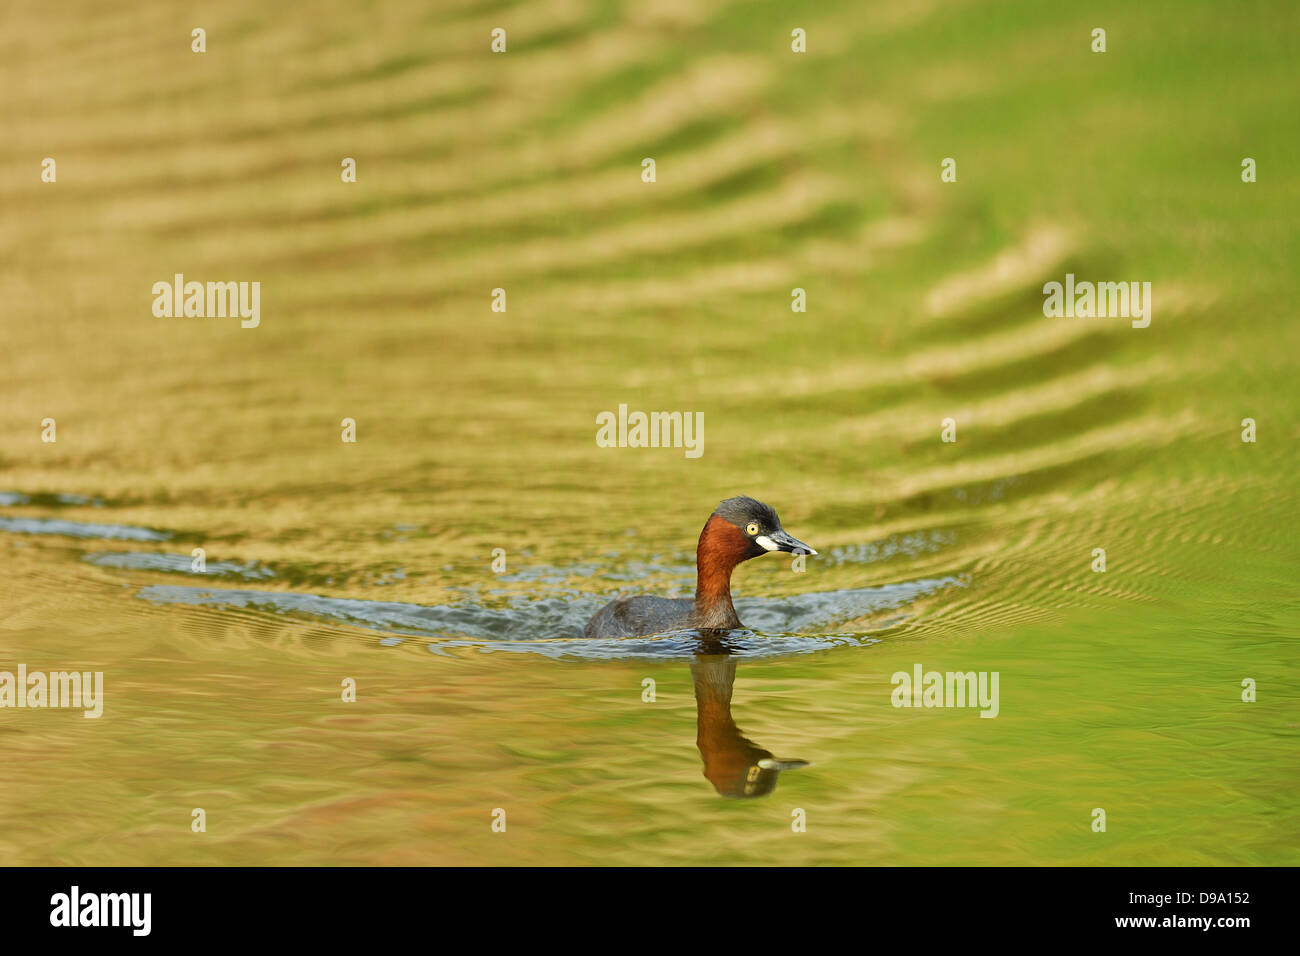 Water bird swimming in lake Stock Photo